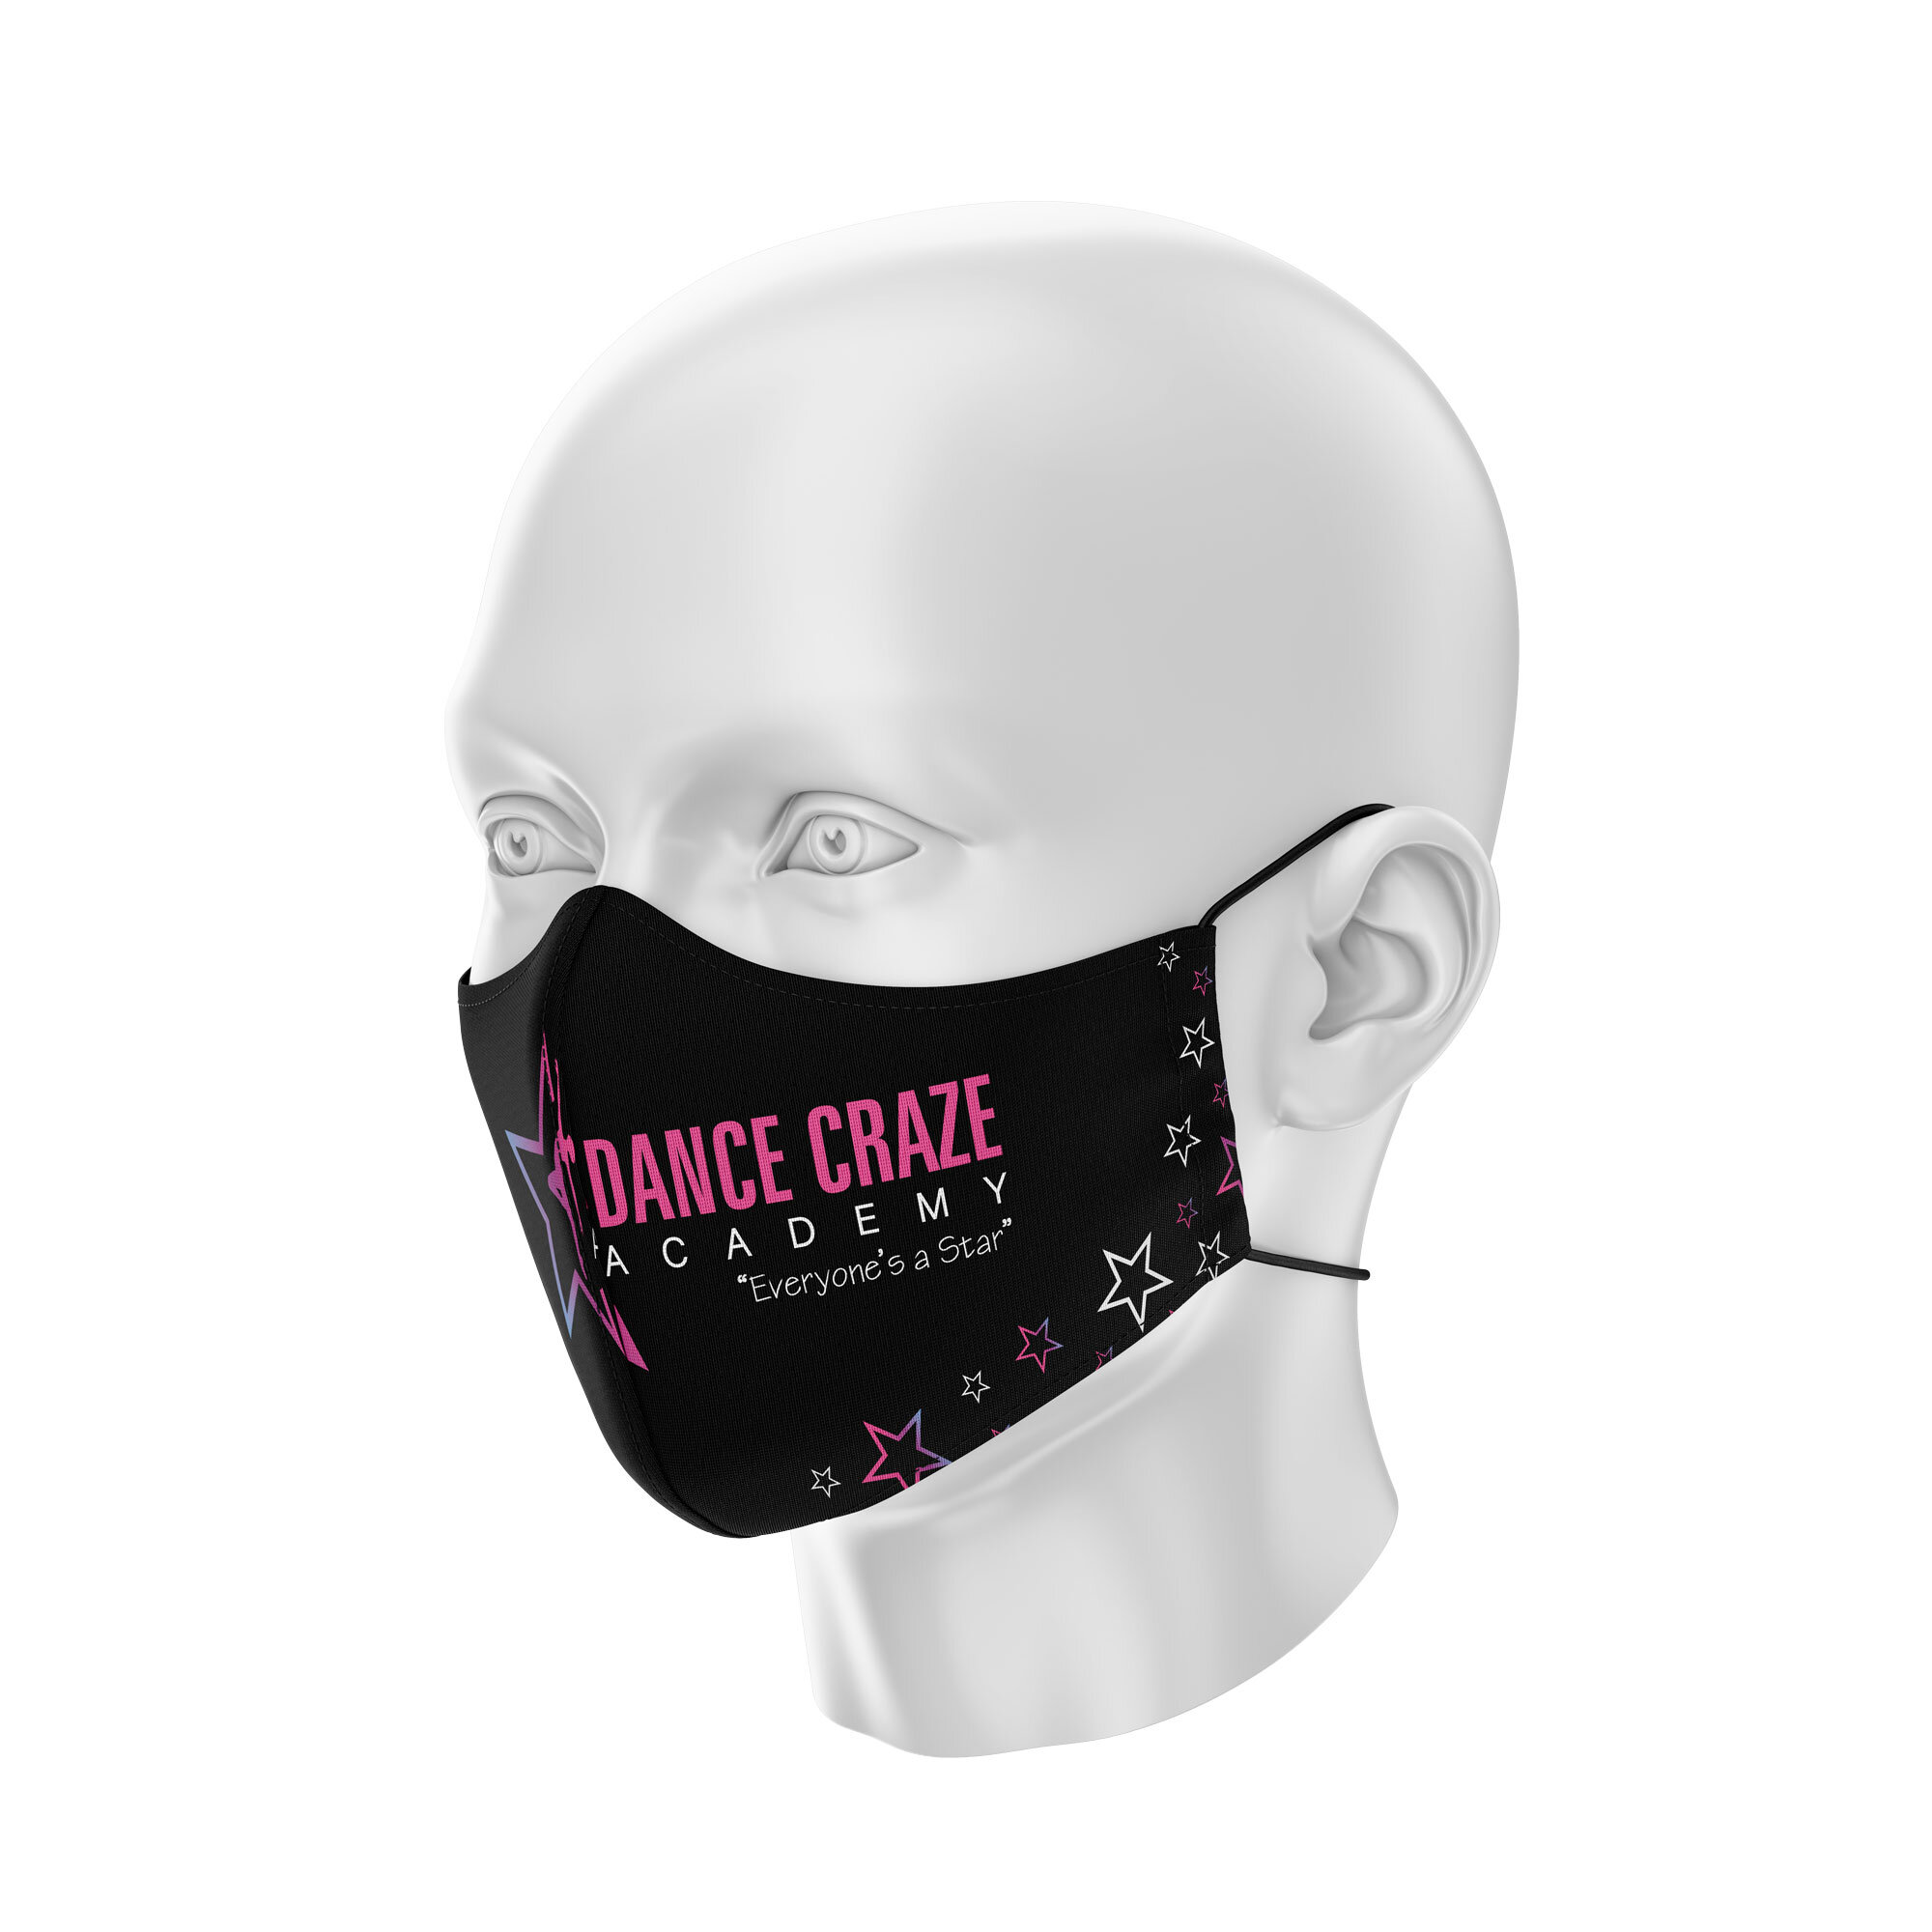 Dance Craze Academy Branded Face Mask